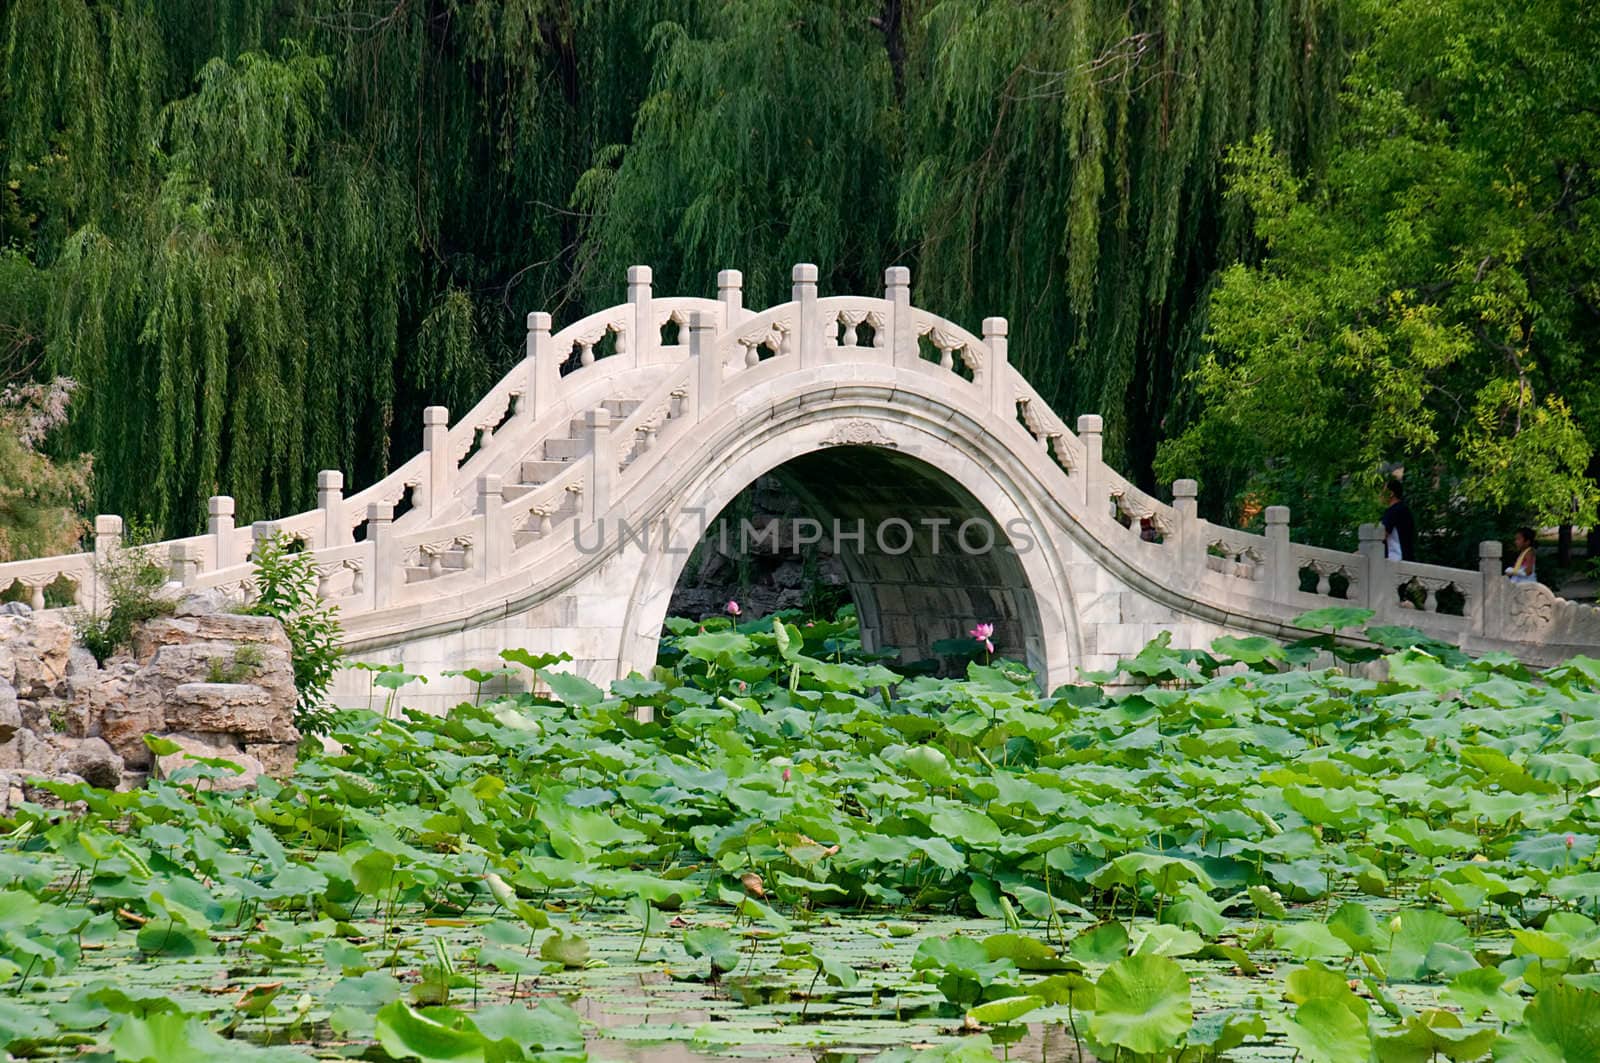 The panorama of lotus pond, garden with bridge